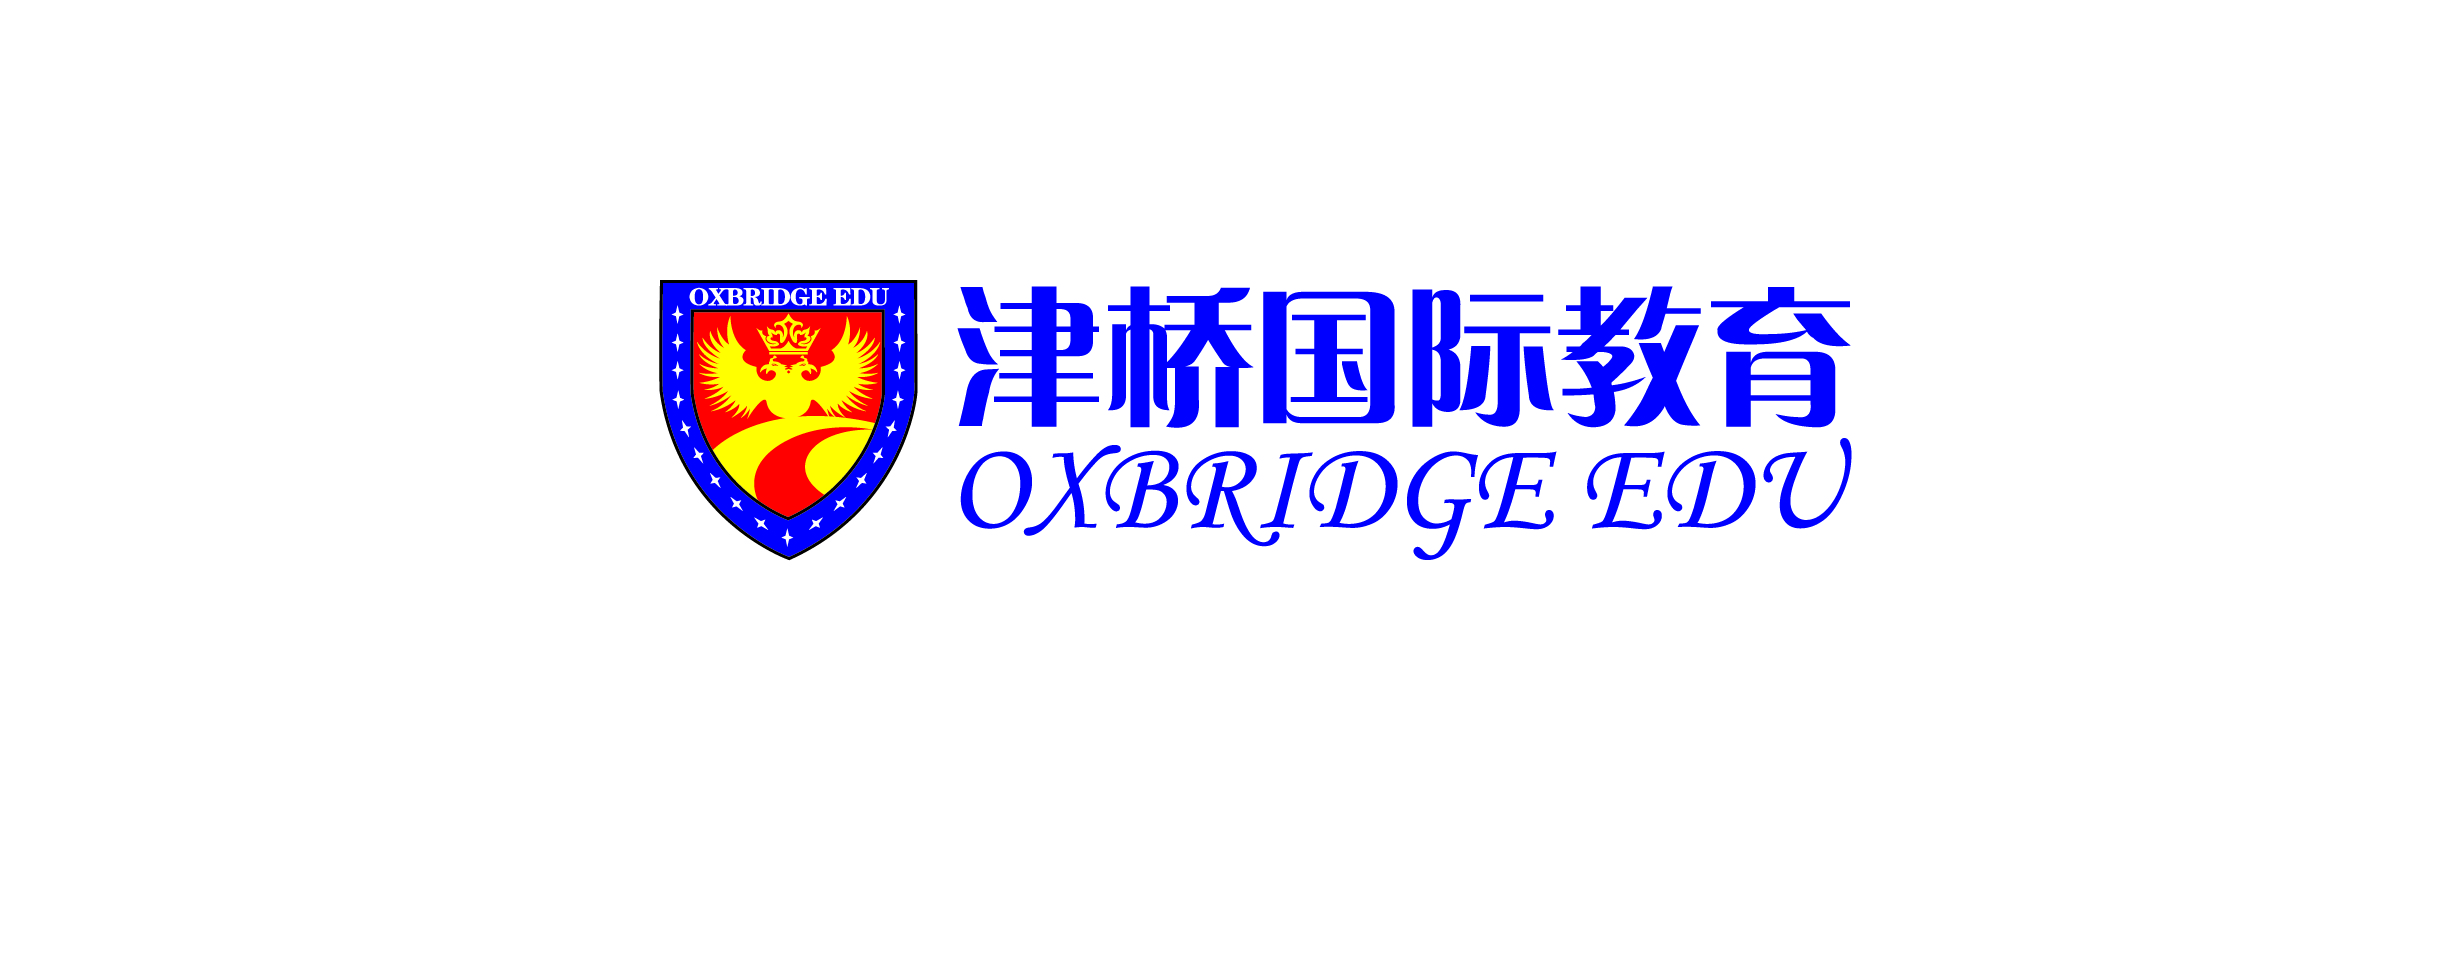 LOGO_Beijing Oxbridge Education & Culture Development Co., Ltd.jpg